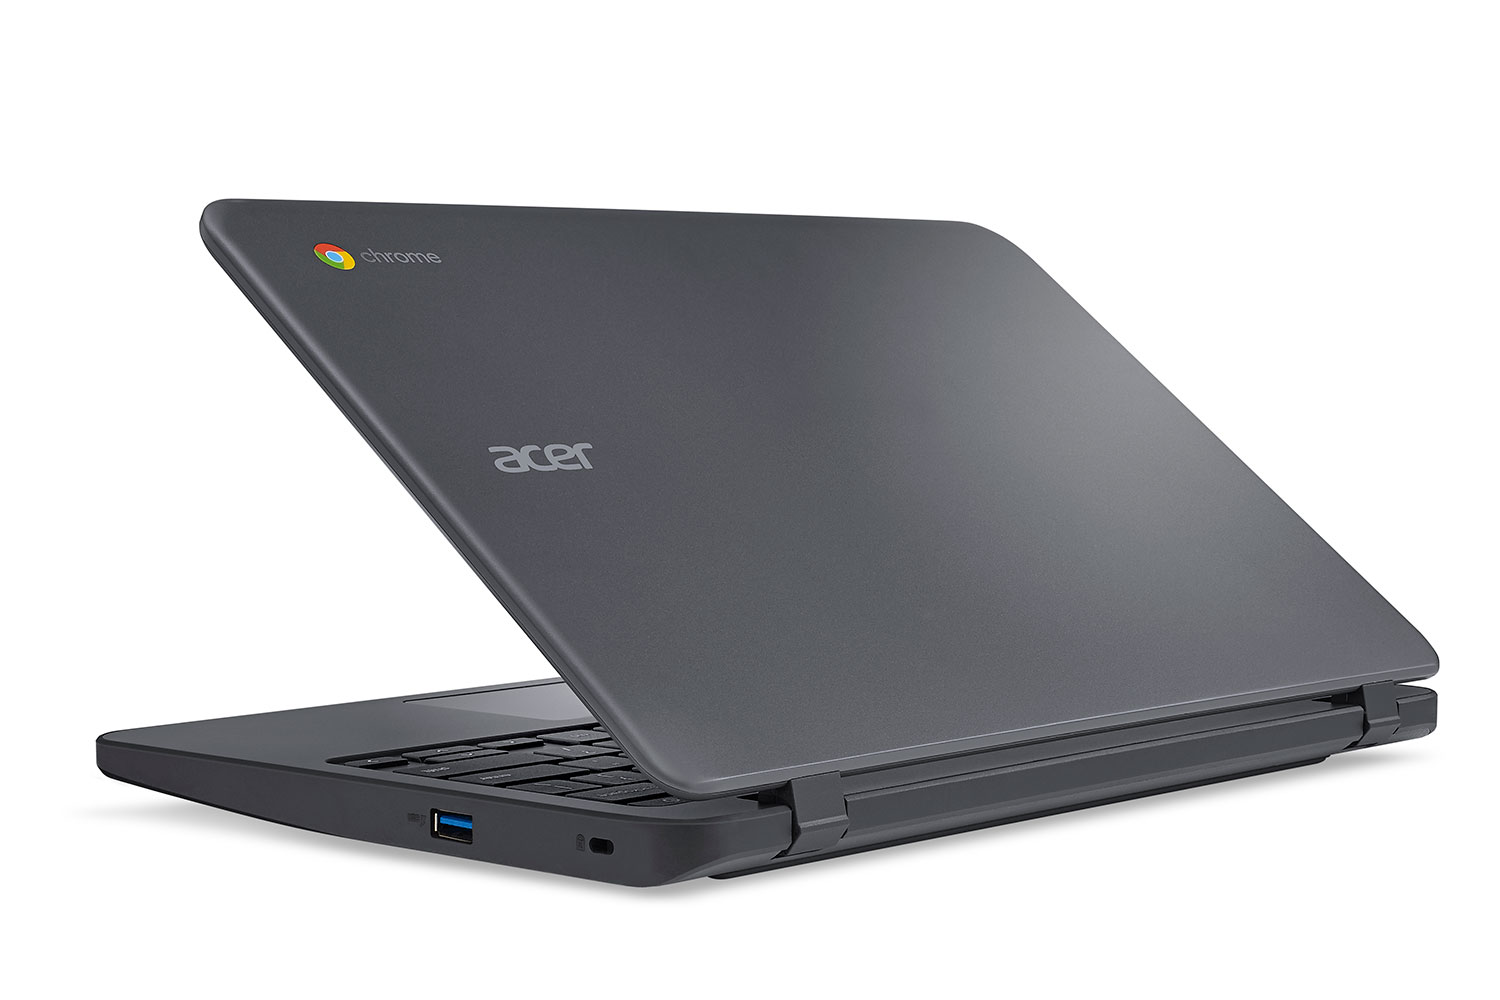 Acer Chromebook 11 N7